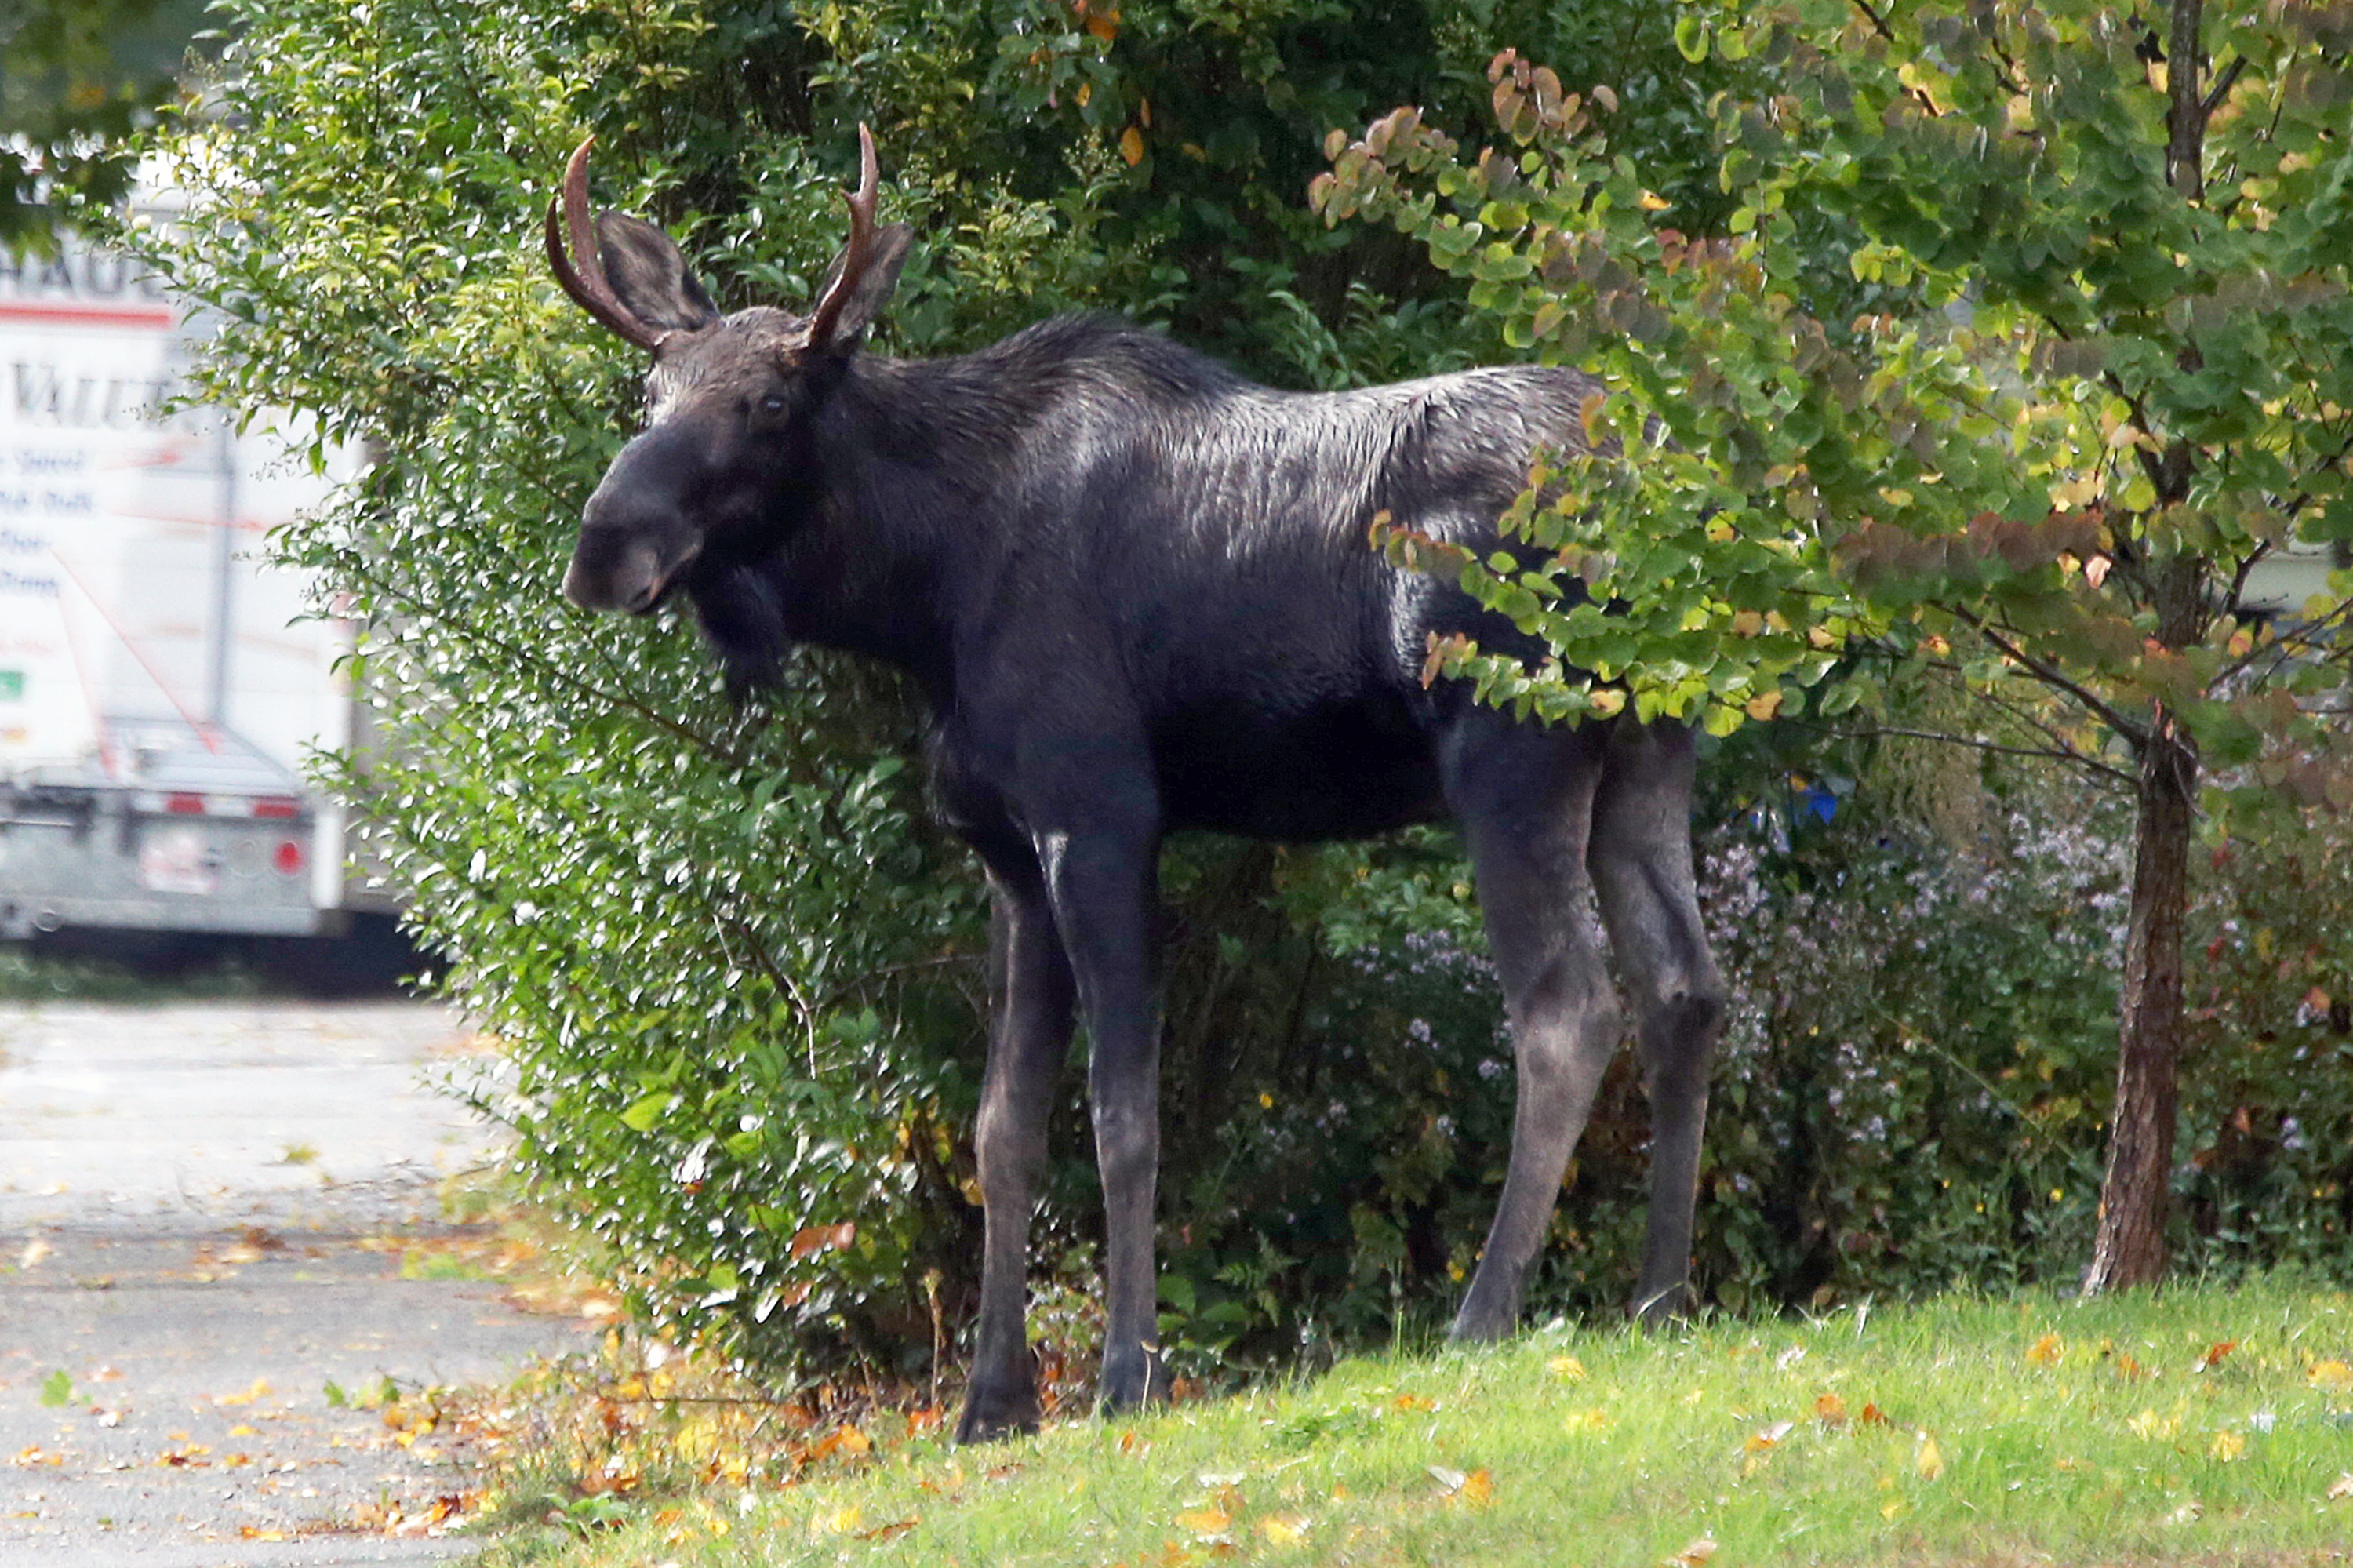 Moose on the loose in the Willard Beach neighborhood of South Portland